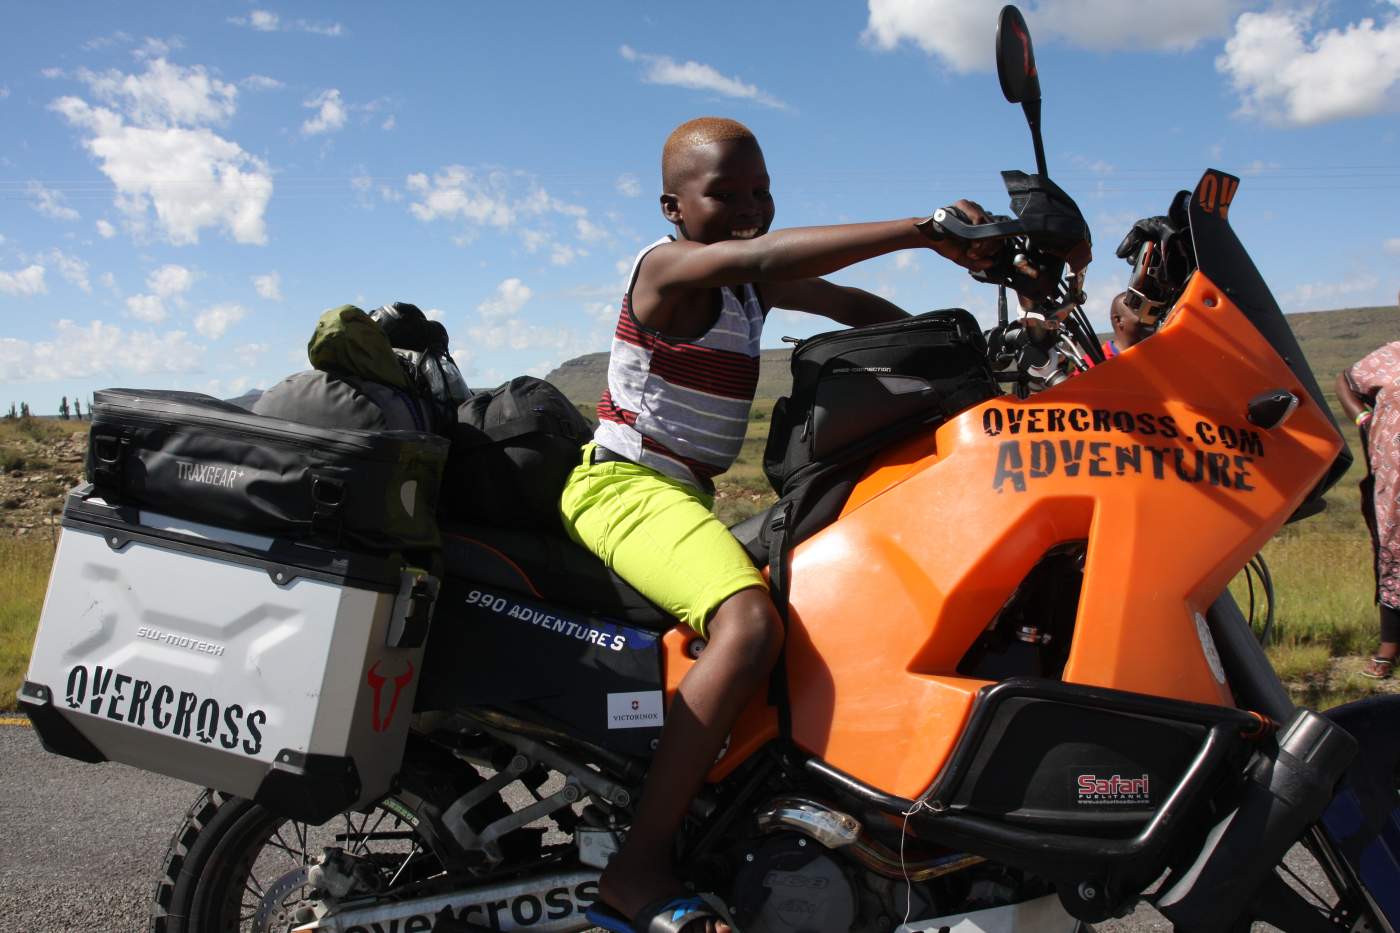 KTM Motoorradvermietung vom Motorrad Reiseanbieter overcross in Afrika